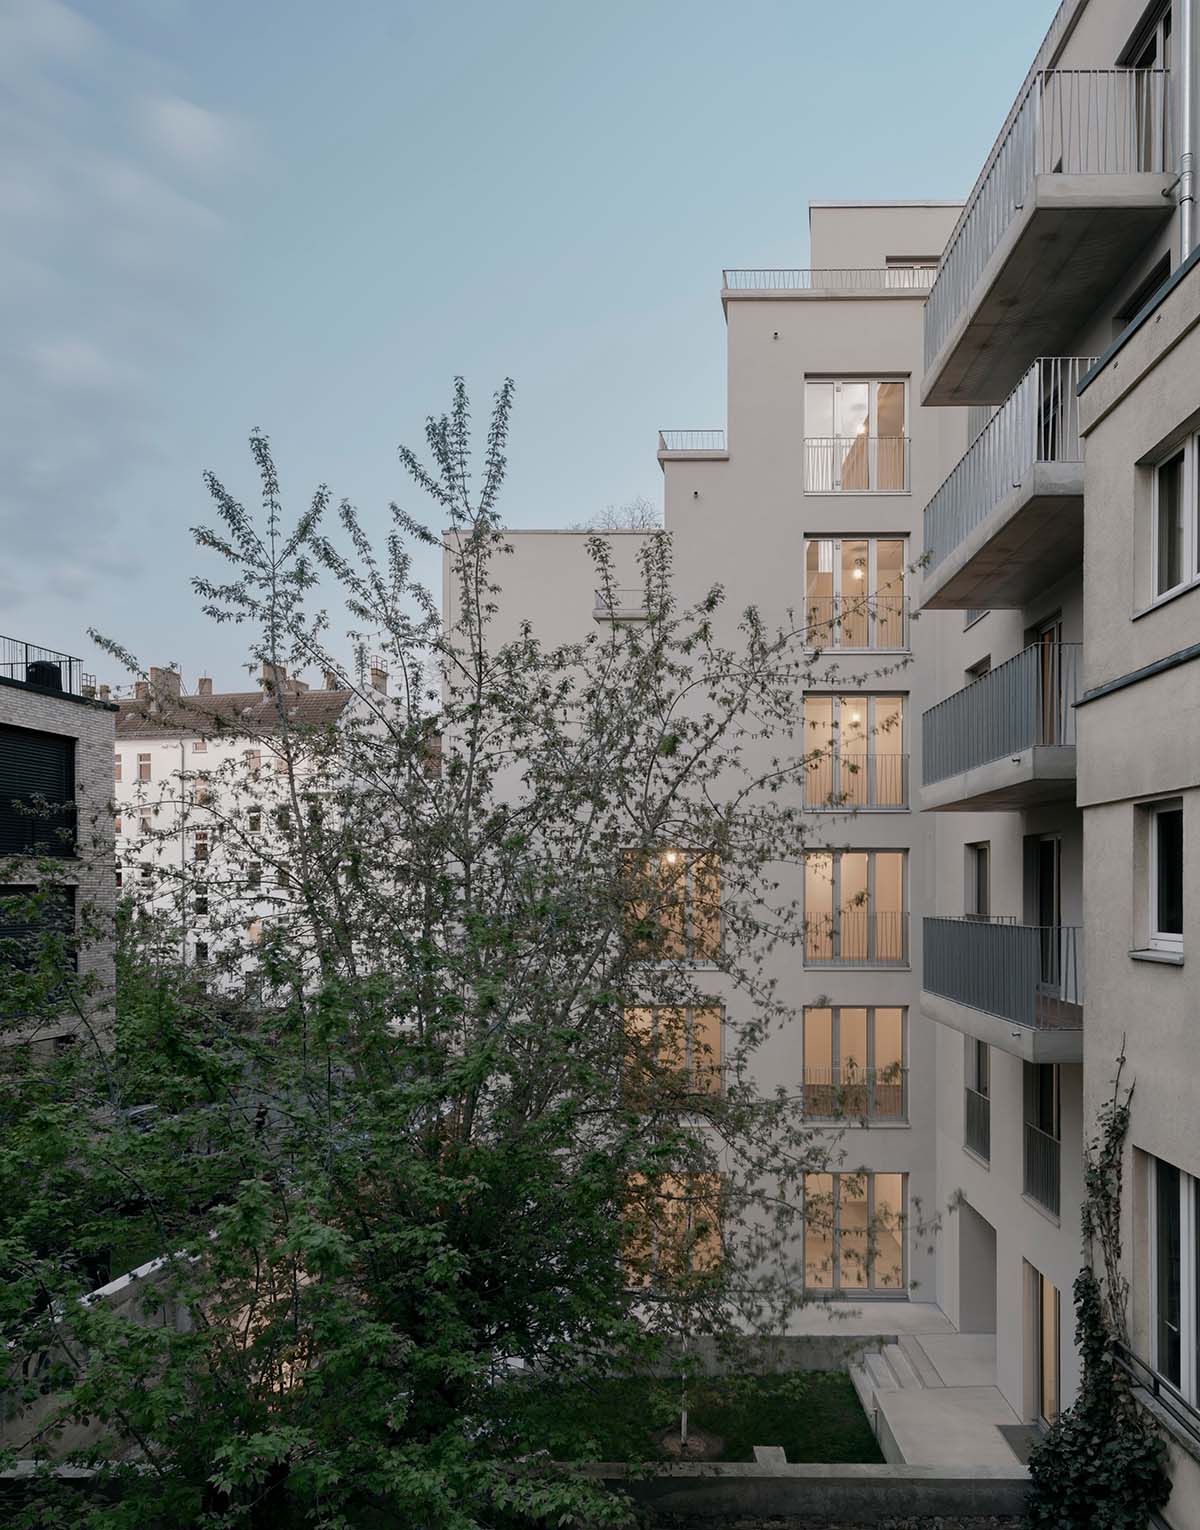 Appels Architekten built new housing featuring sleek and raw interiors in Berlin